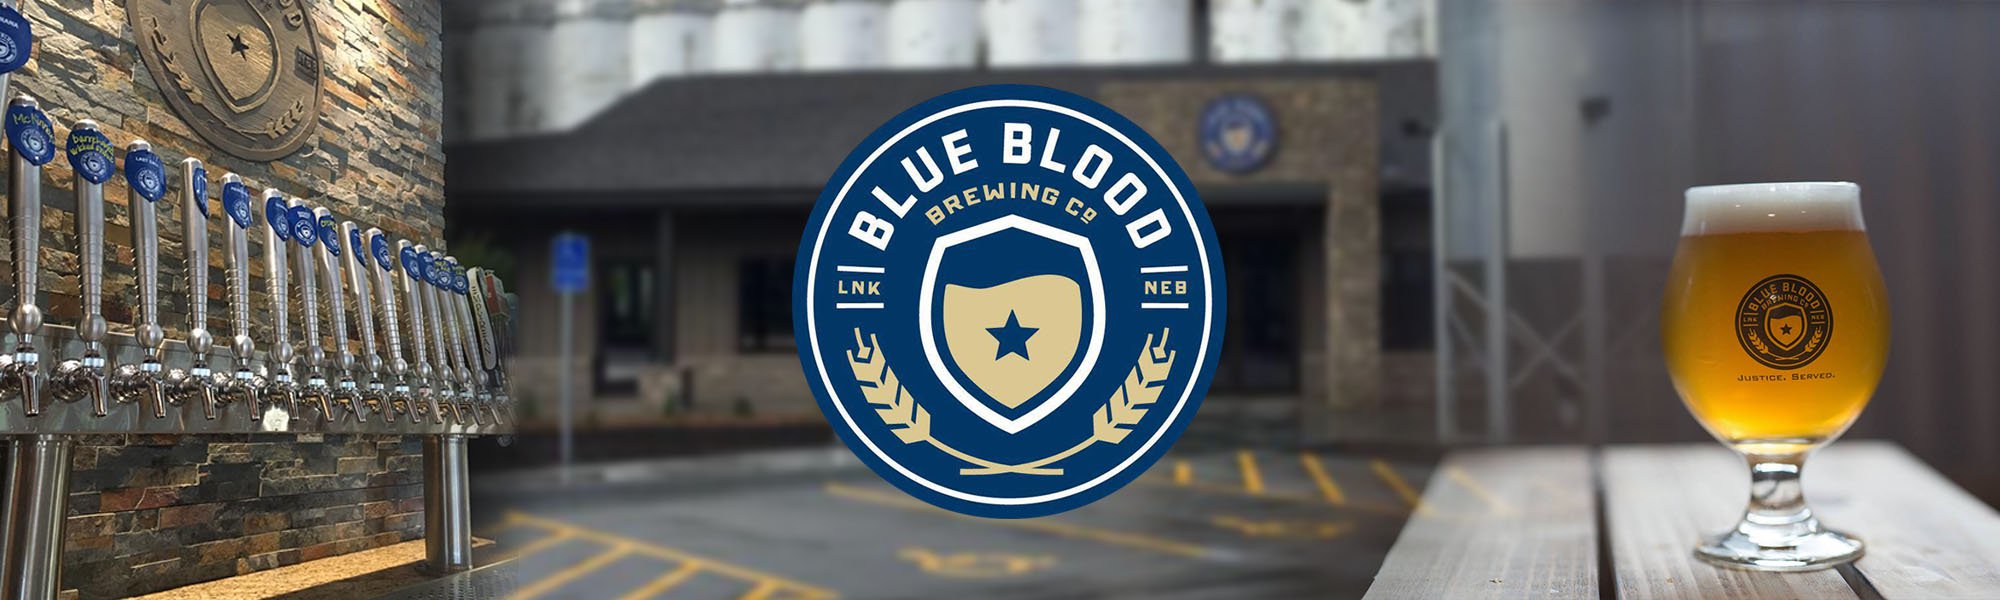 Saltdogs News - Blue Blood Brewery